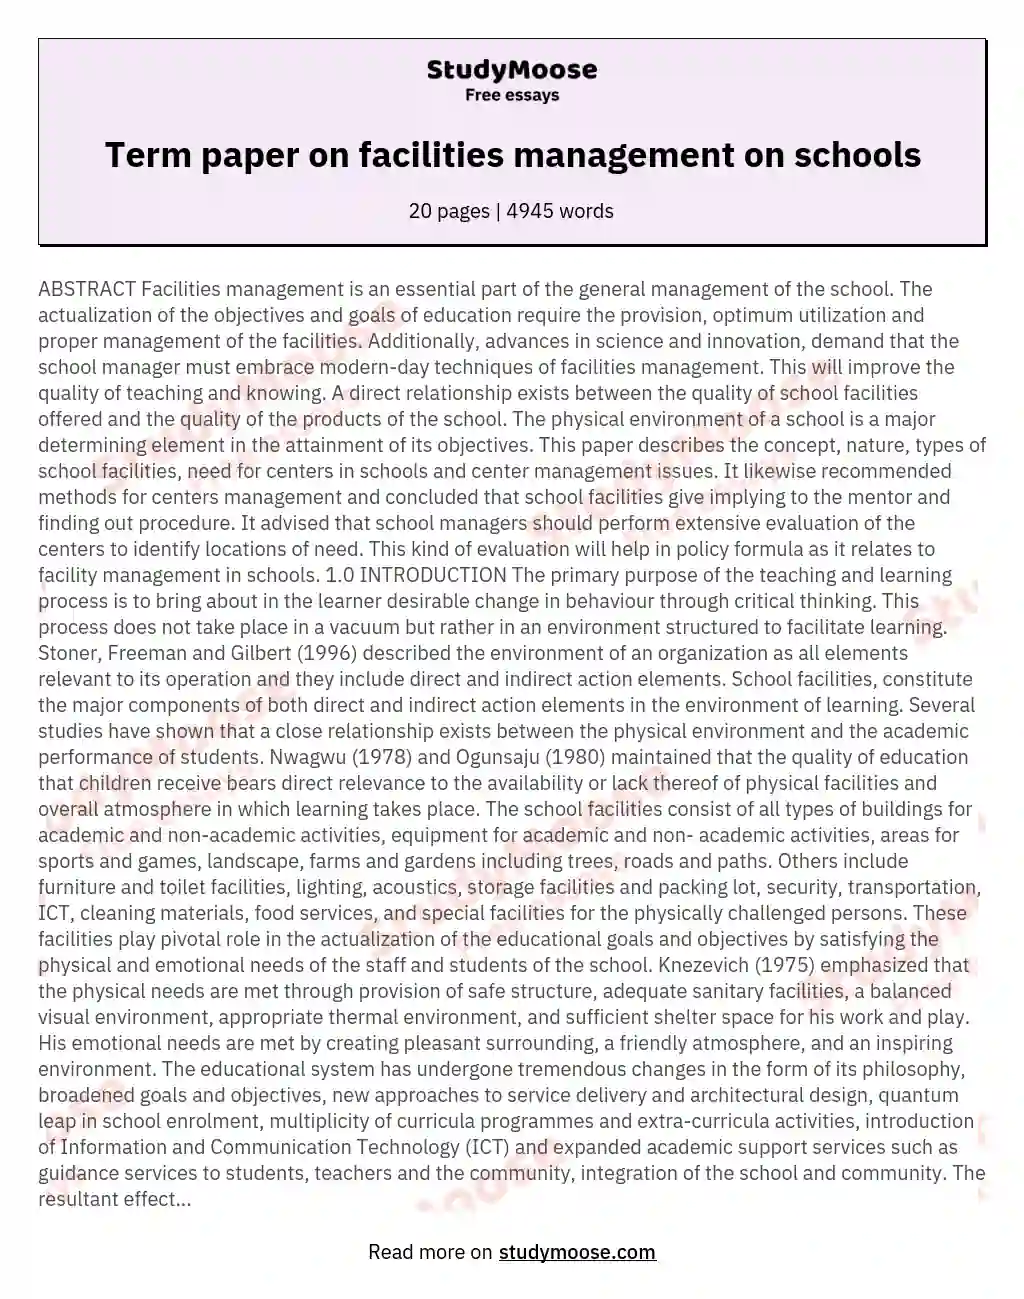 essay report about school facilities